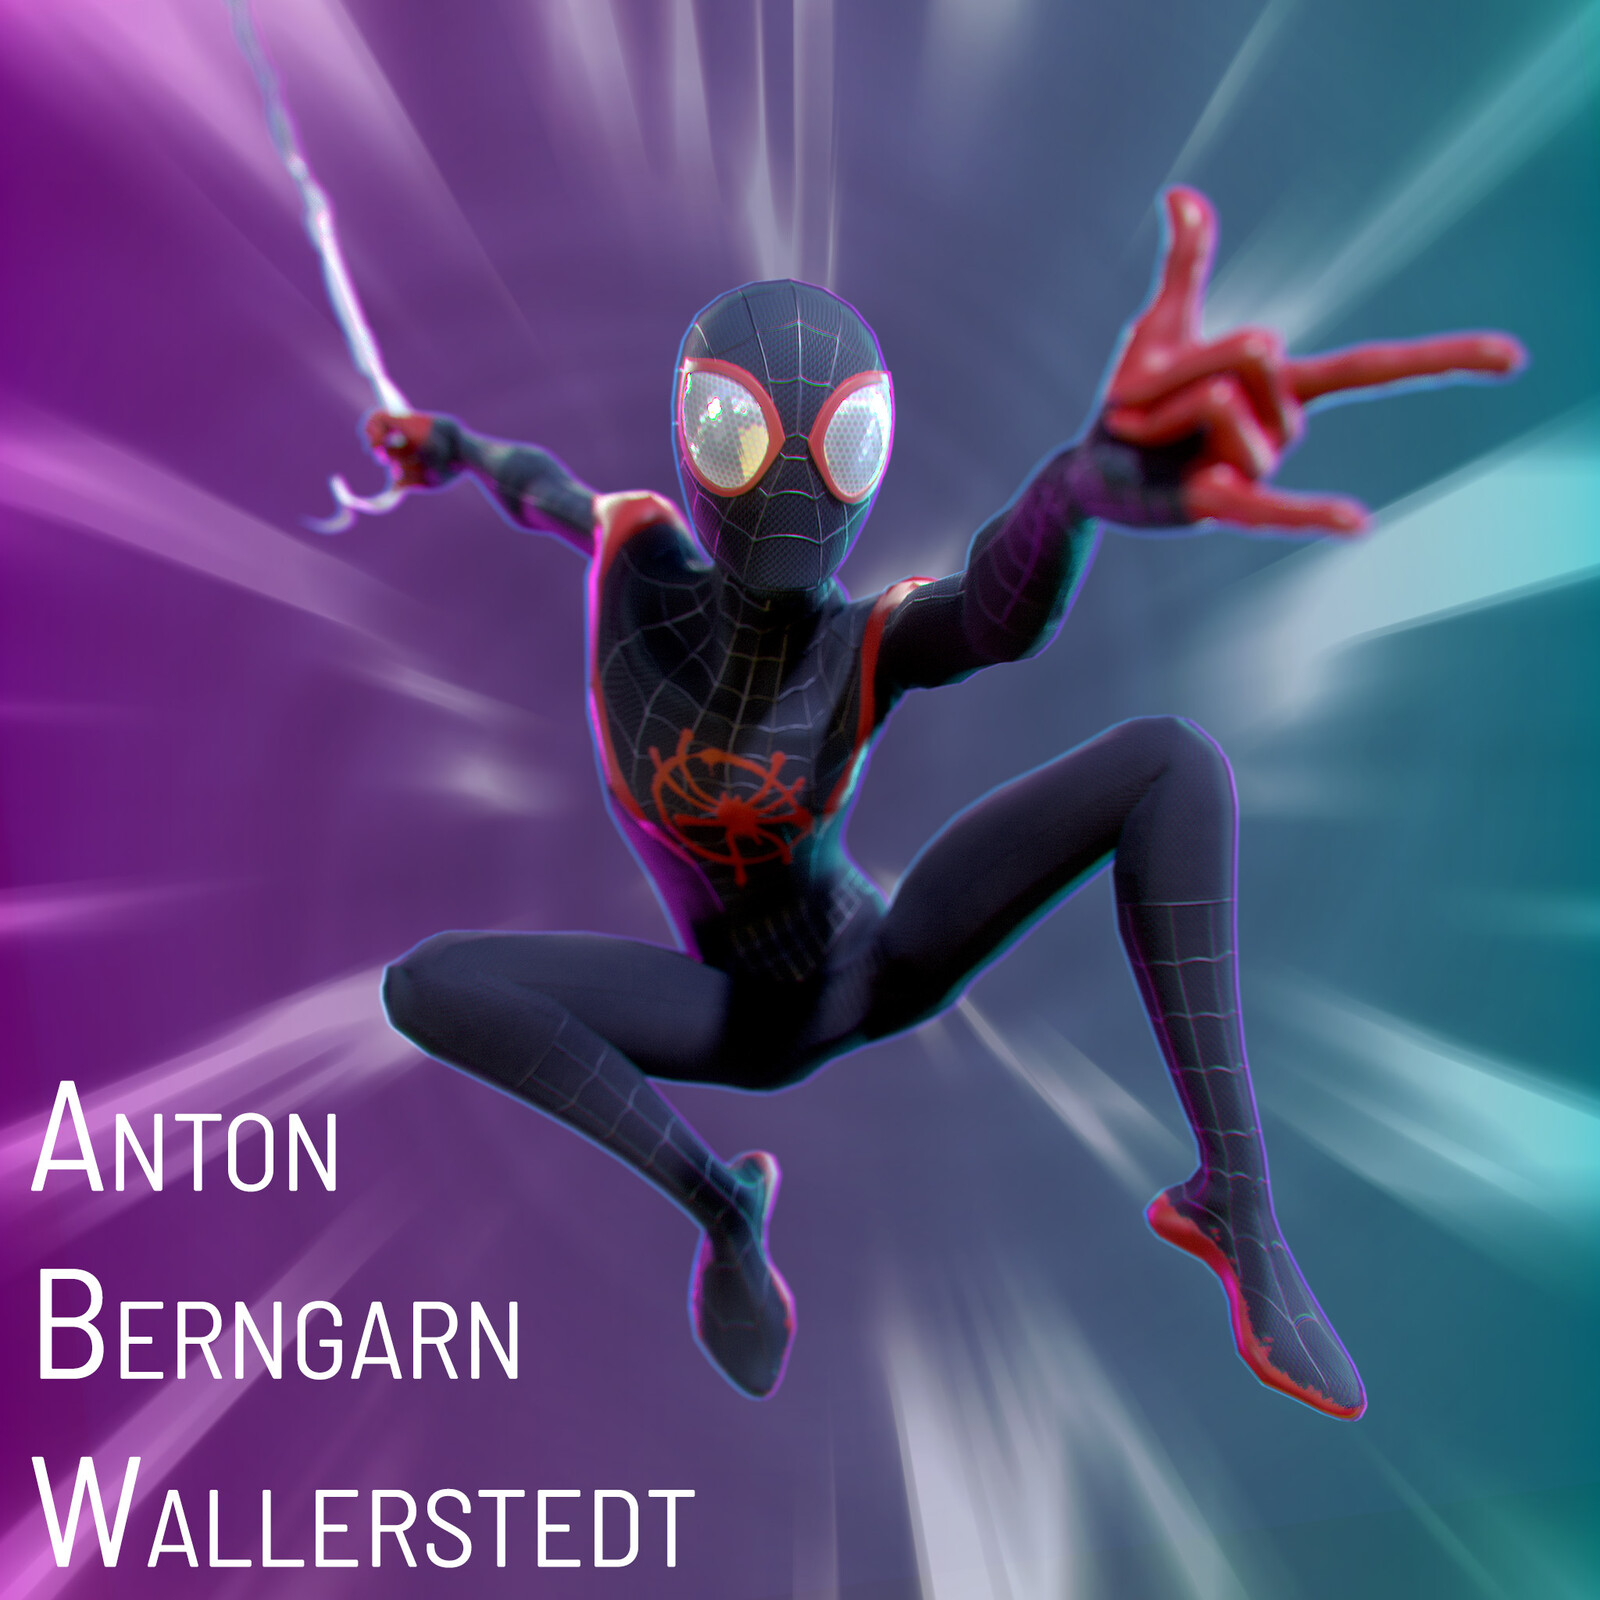 Spider-Man / Miles Morales in his Spider-Verse suit (Fan Art)